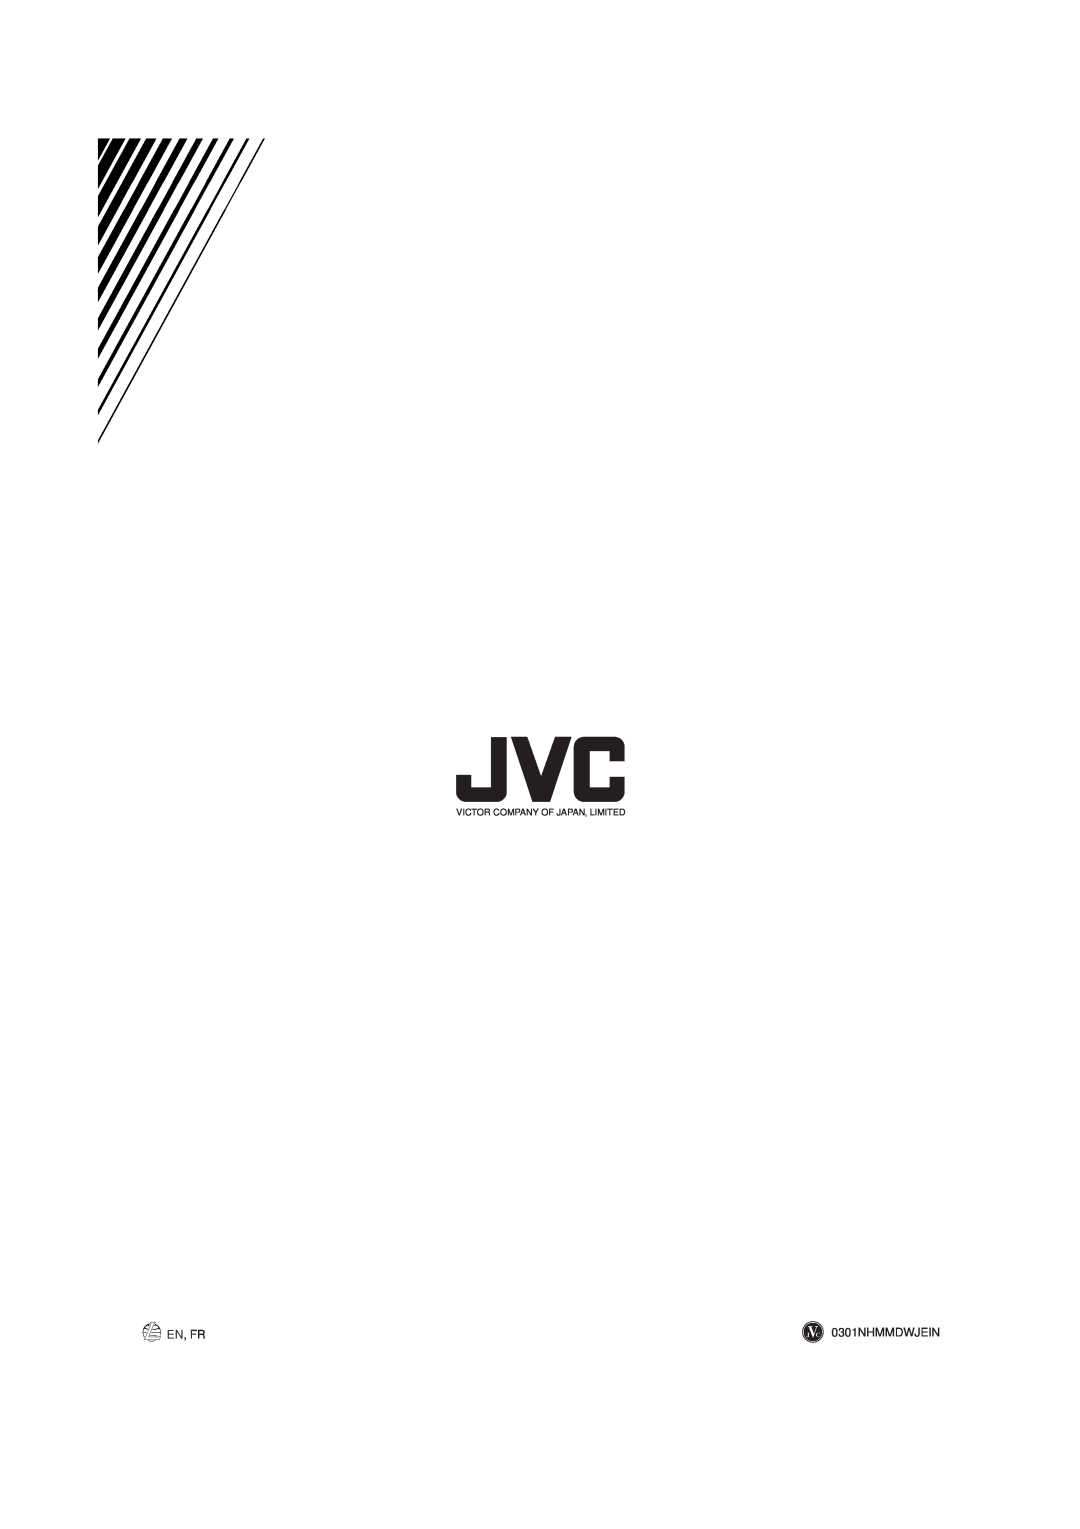 JVC RX-6510VBK manual En, Fr, J C 0301NHMMDWJEIN, Victor Company Of Japan, Limited 